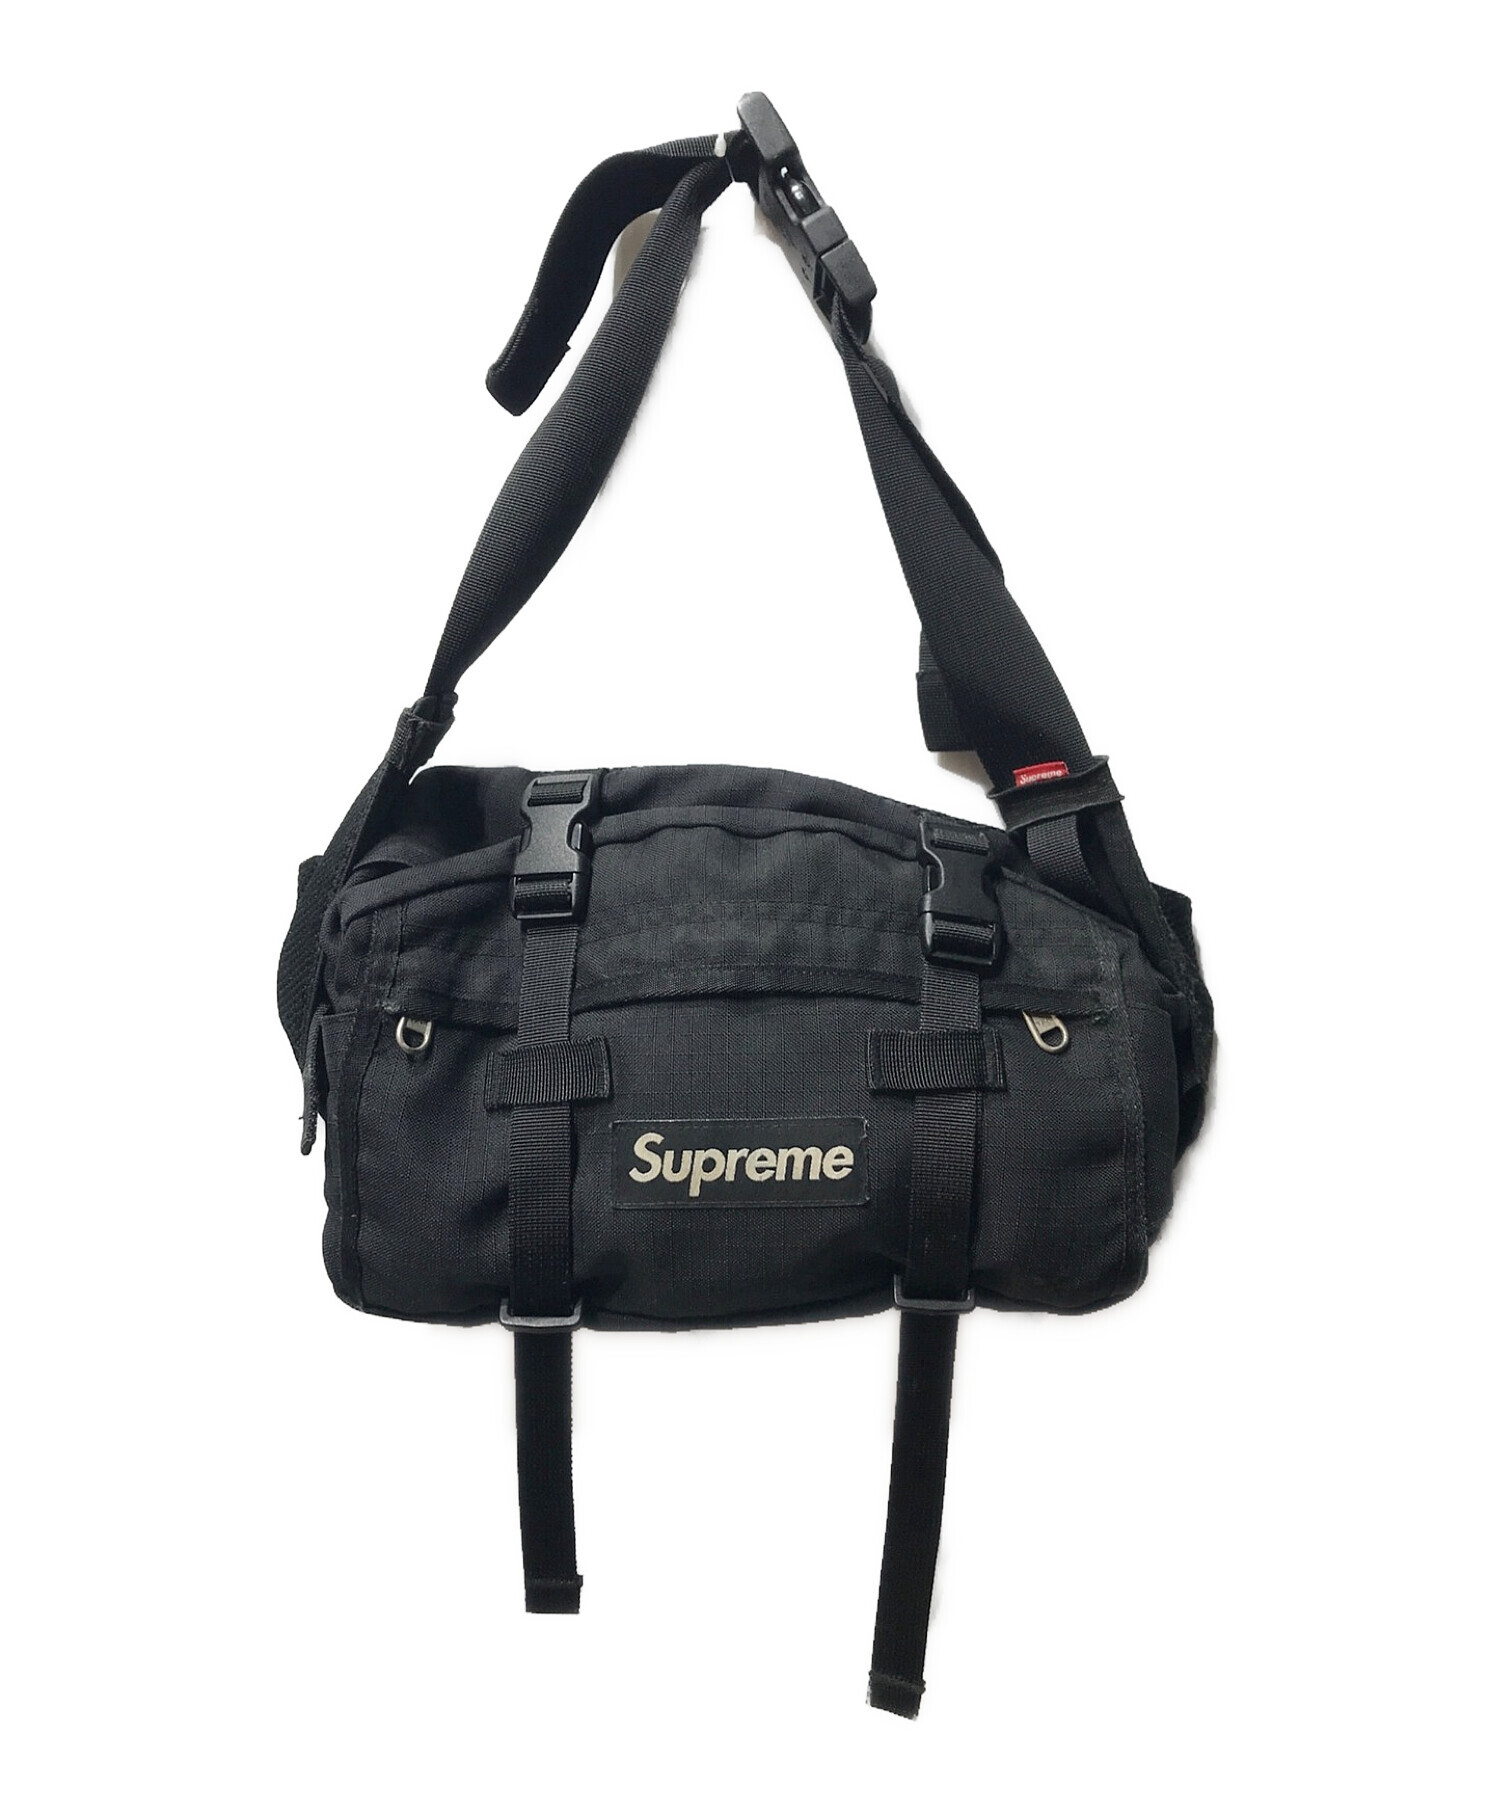 Supreme - Supreme waist bag black 19aw ブラックの+bstrading.net